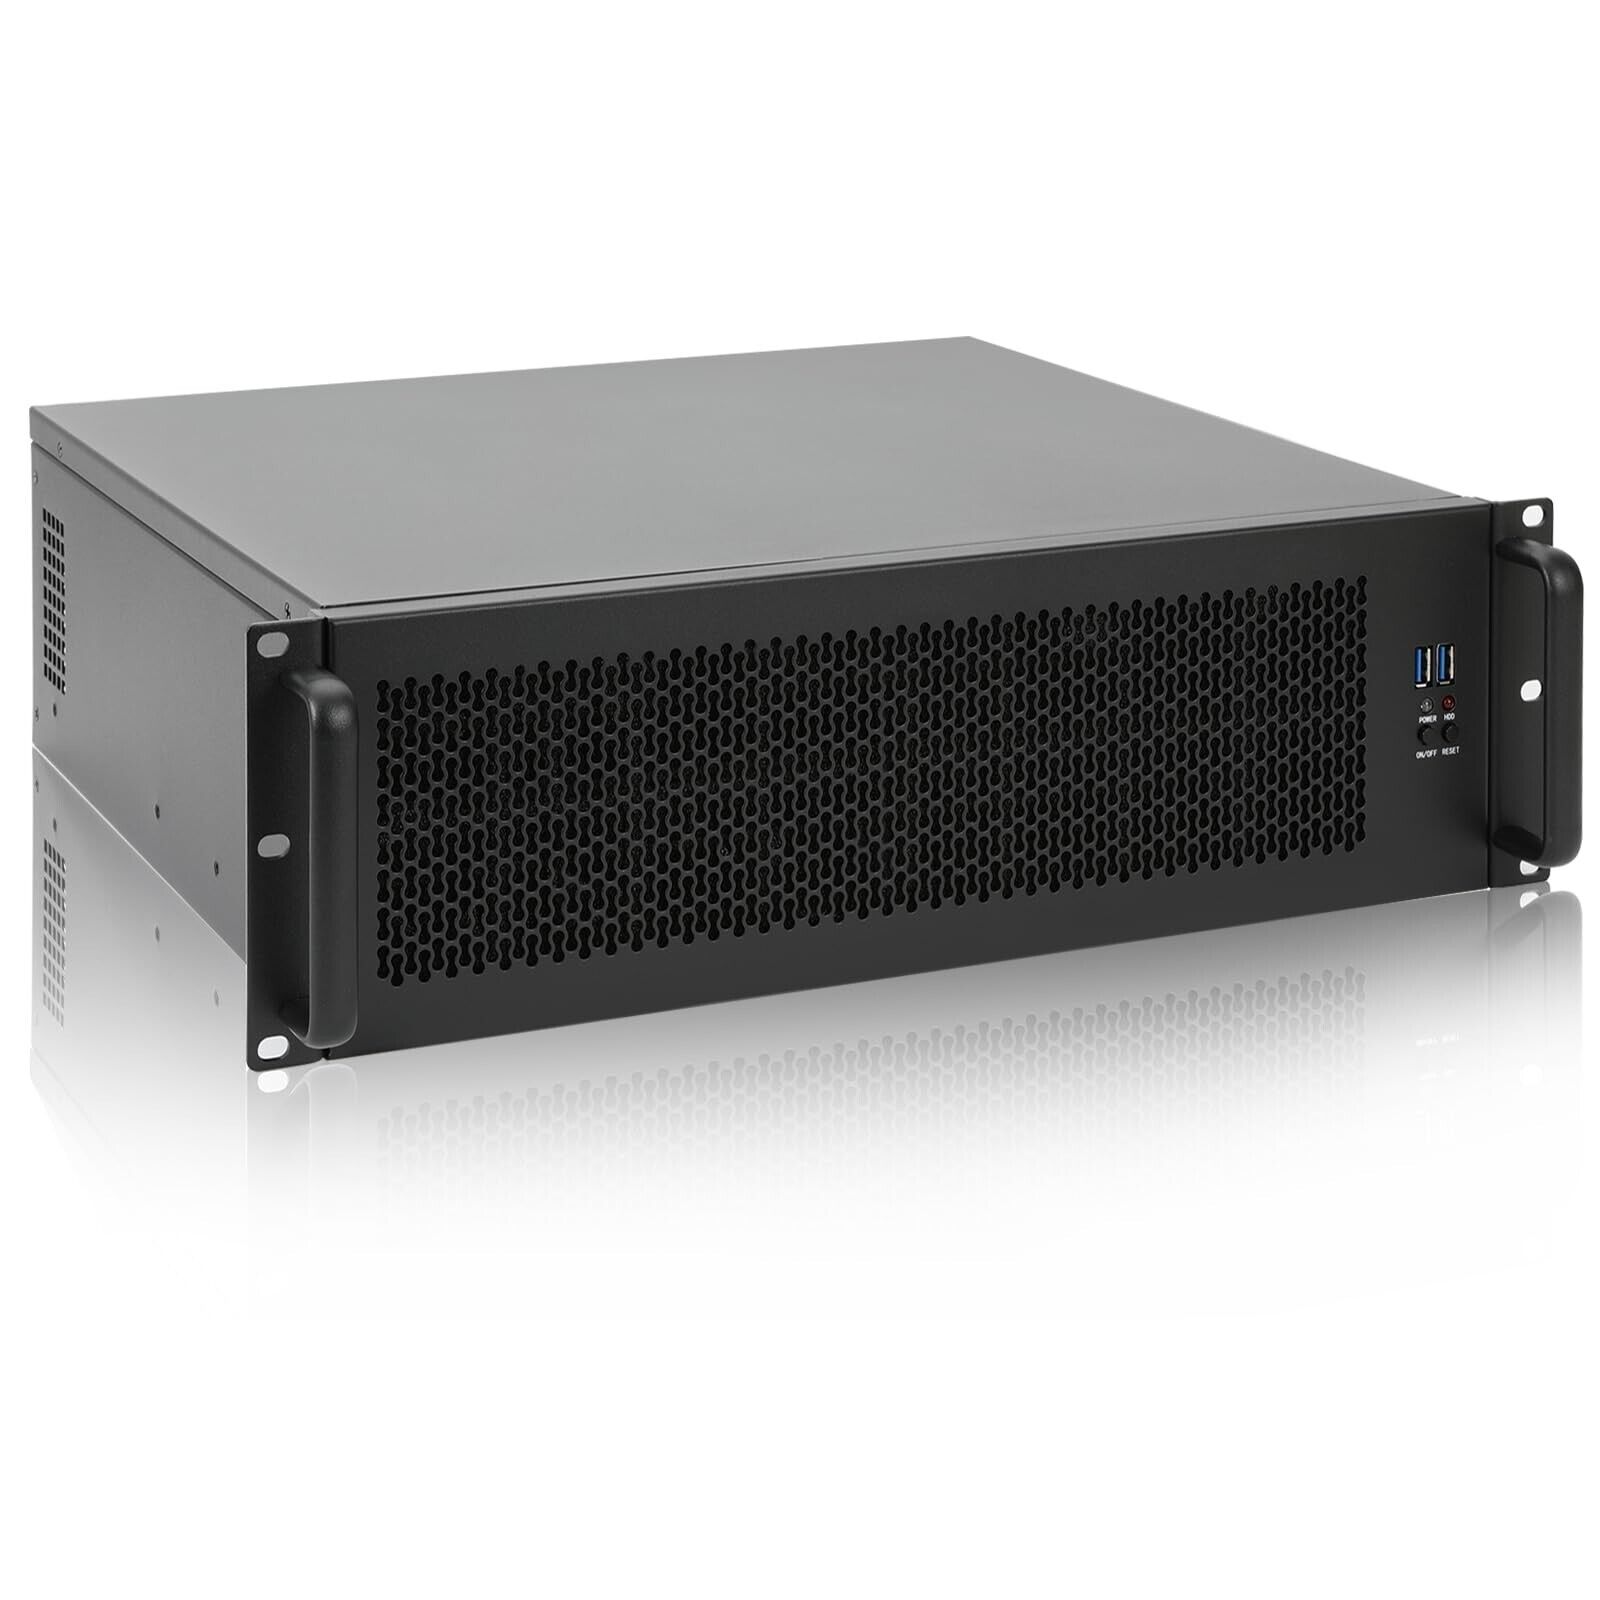 RackChoice 3U rackmount Server Chassis Support Liquid Cooling Compatibility u...